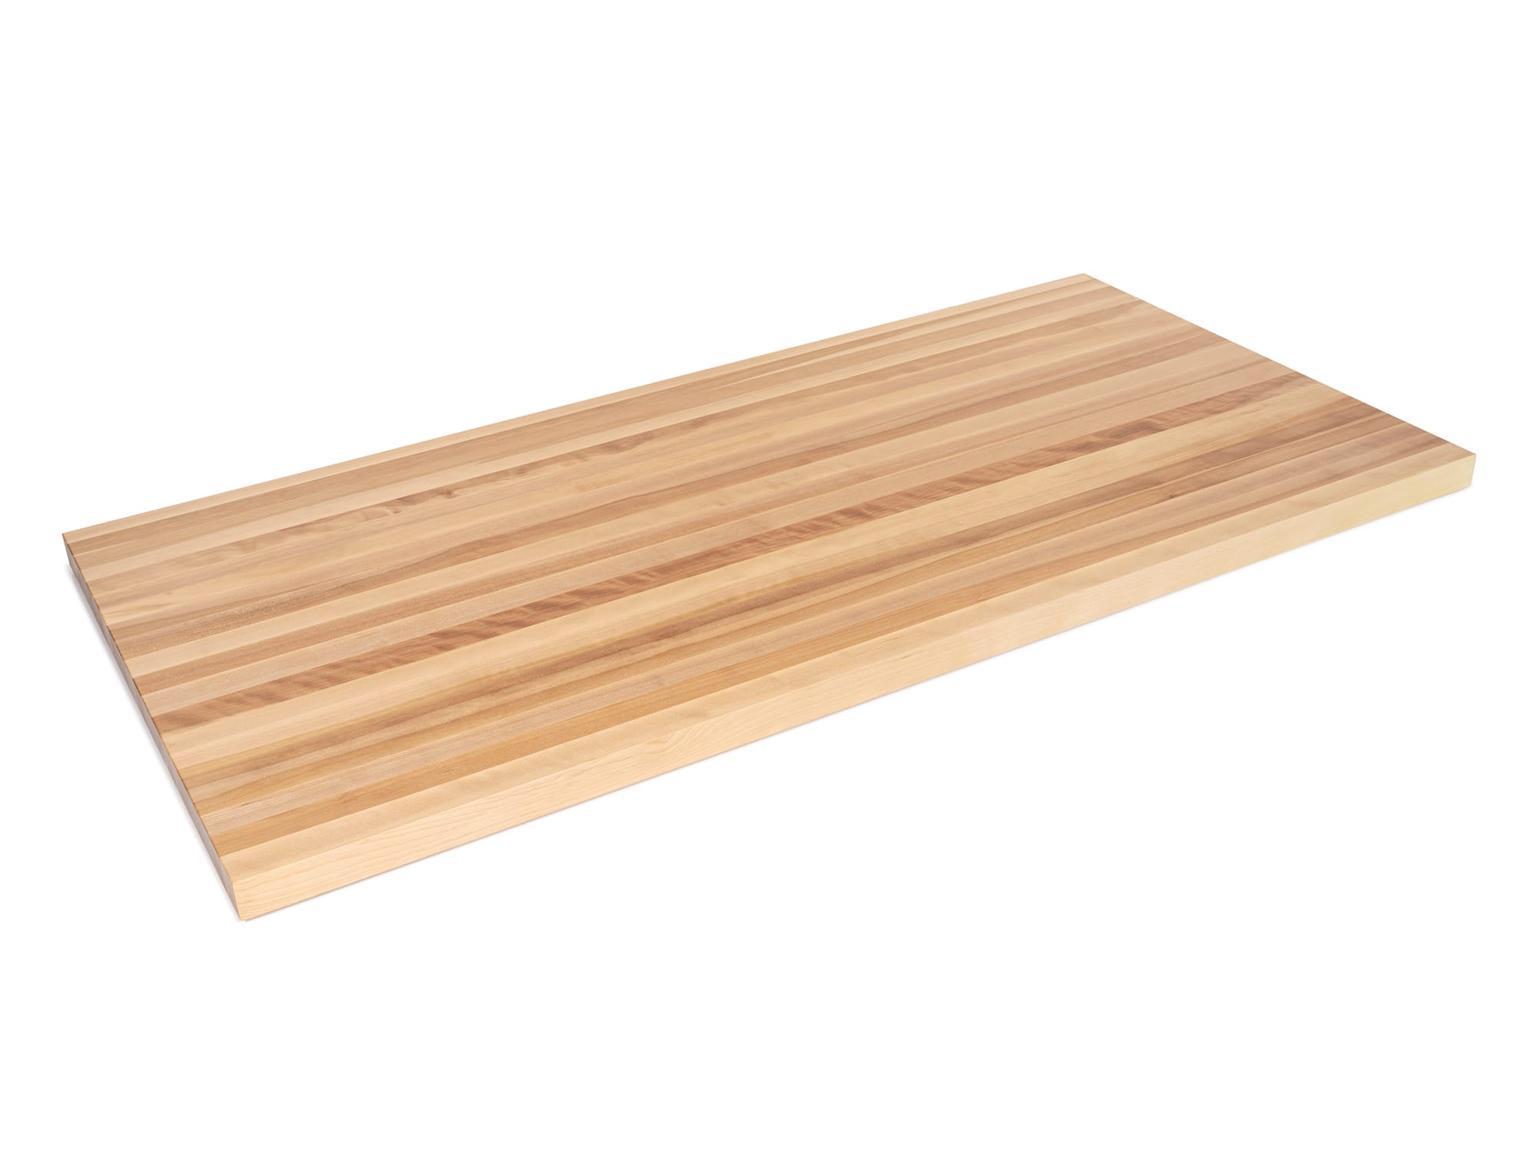 Laminated Wood Top